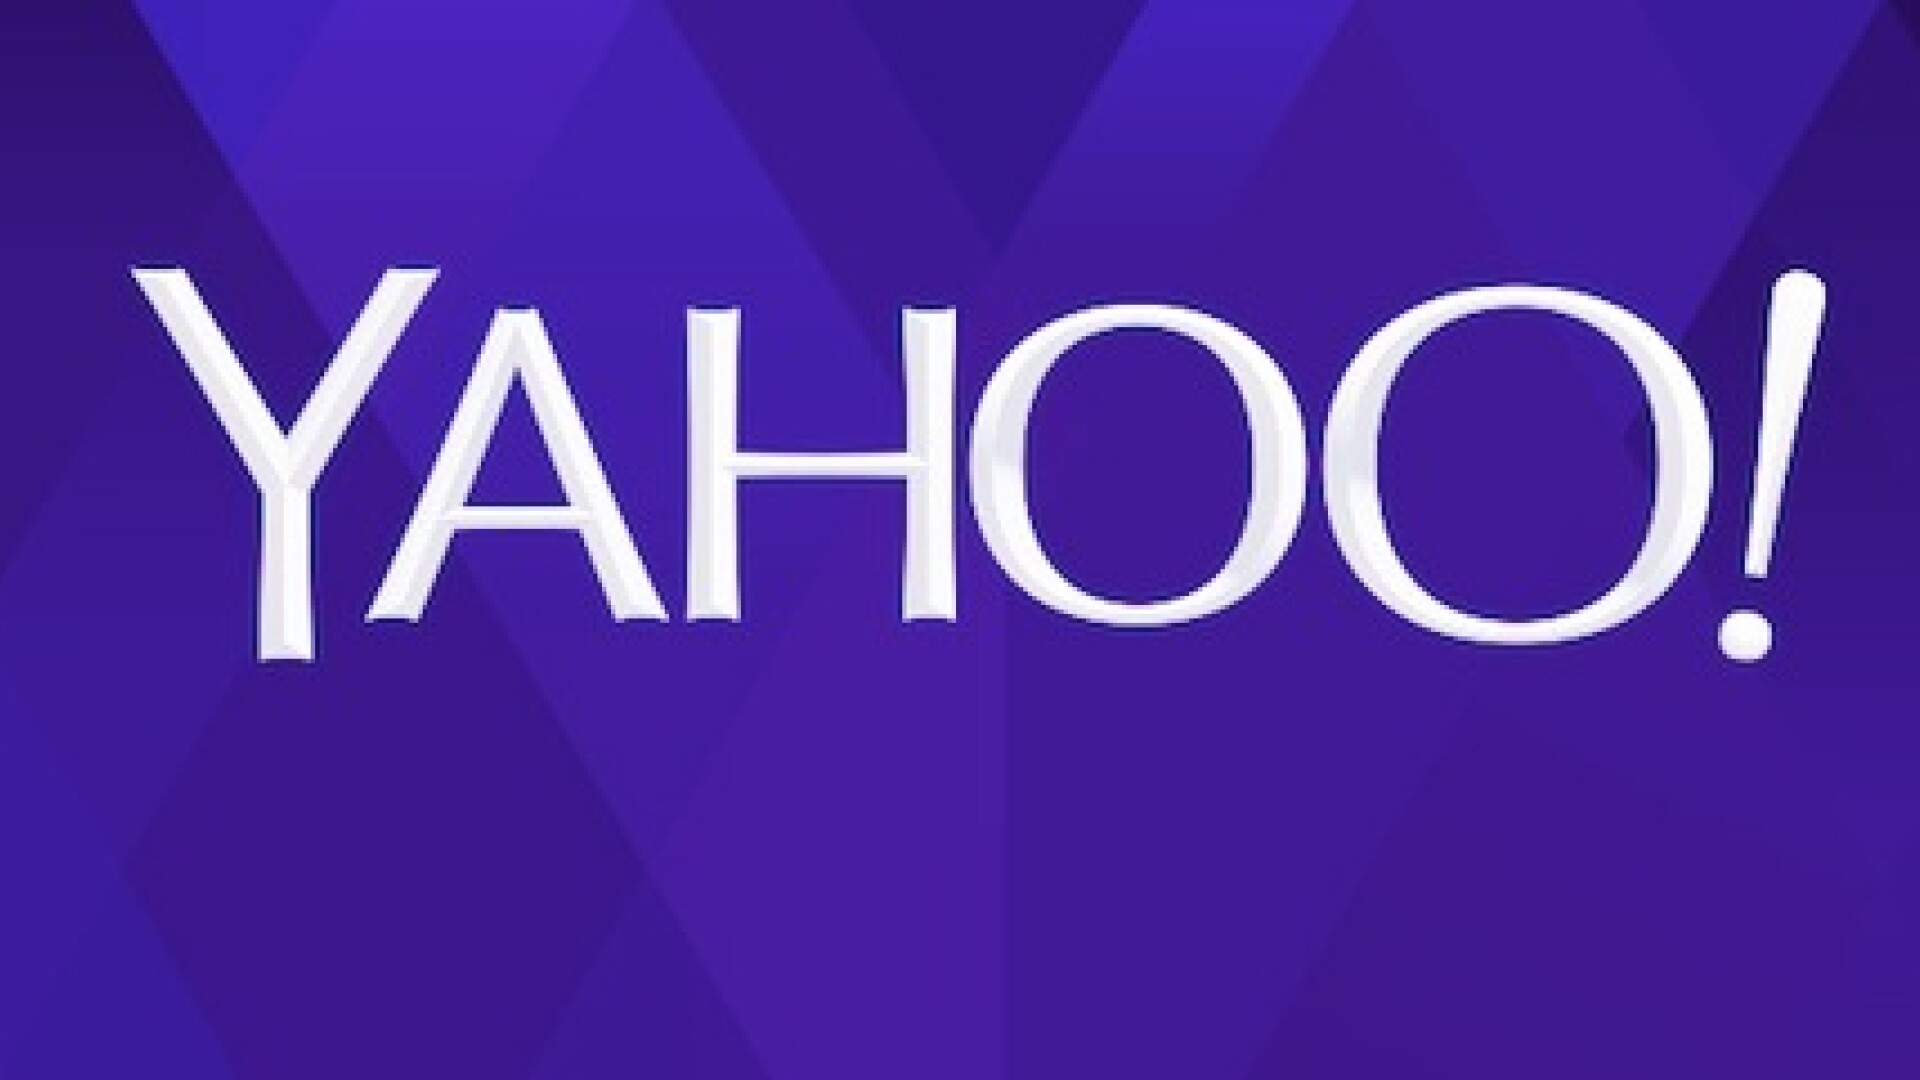 Yahoo! Social Bar